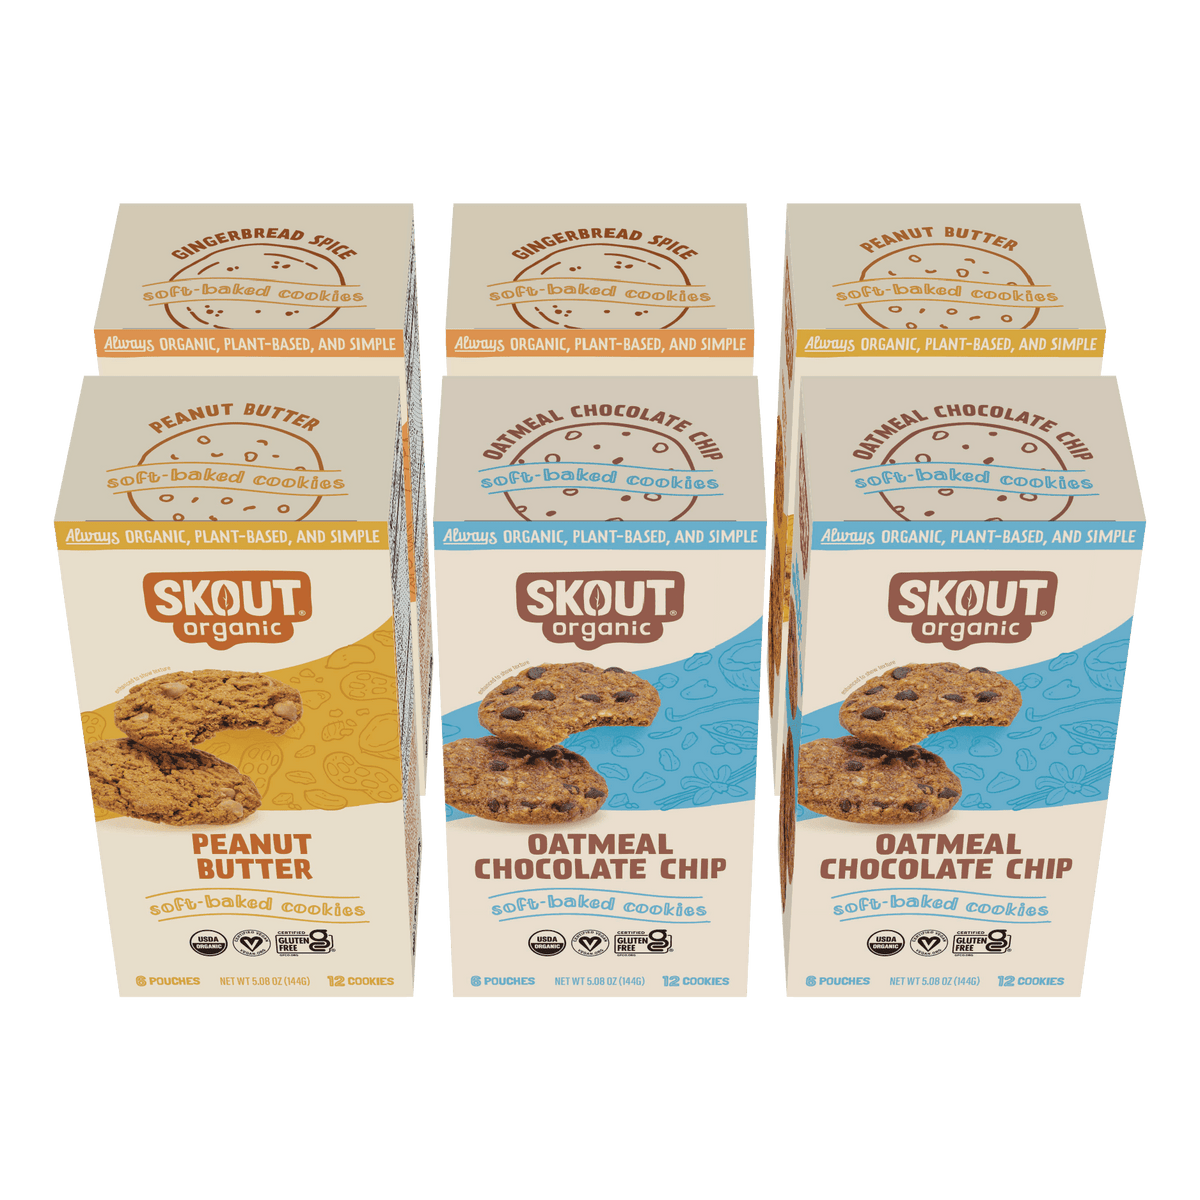 Soft-Baked Cookie Build a Box Bundle Parent - Cookies Skout Organic 6 Pack 